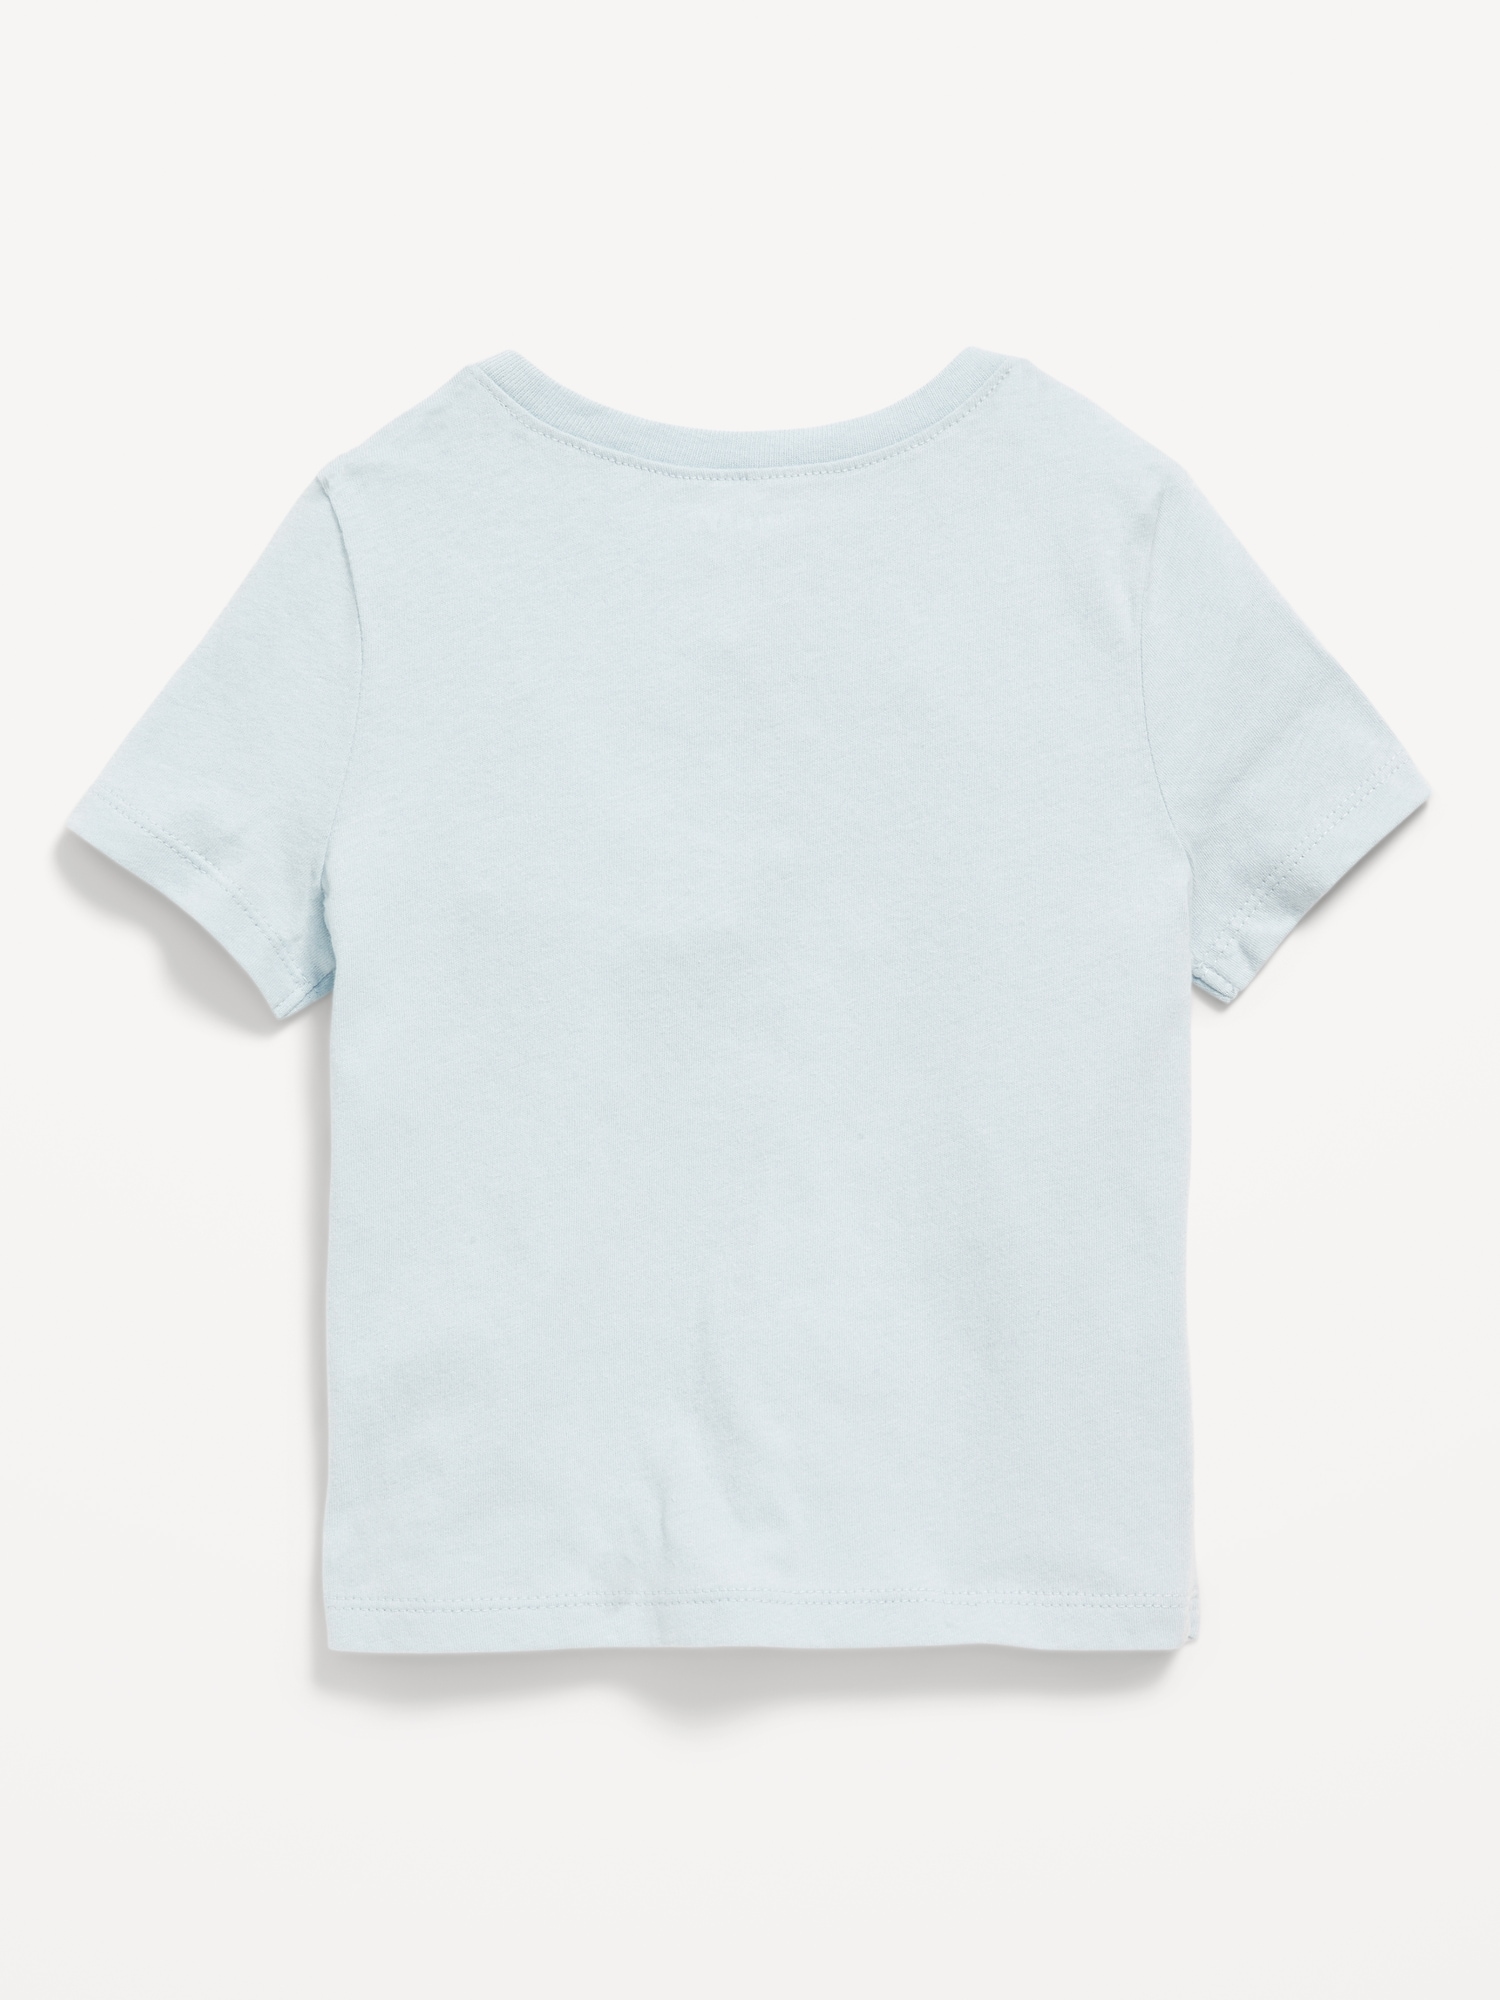 Disney© Stitch Unisex Graphic T-Shirt for Toddler